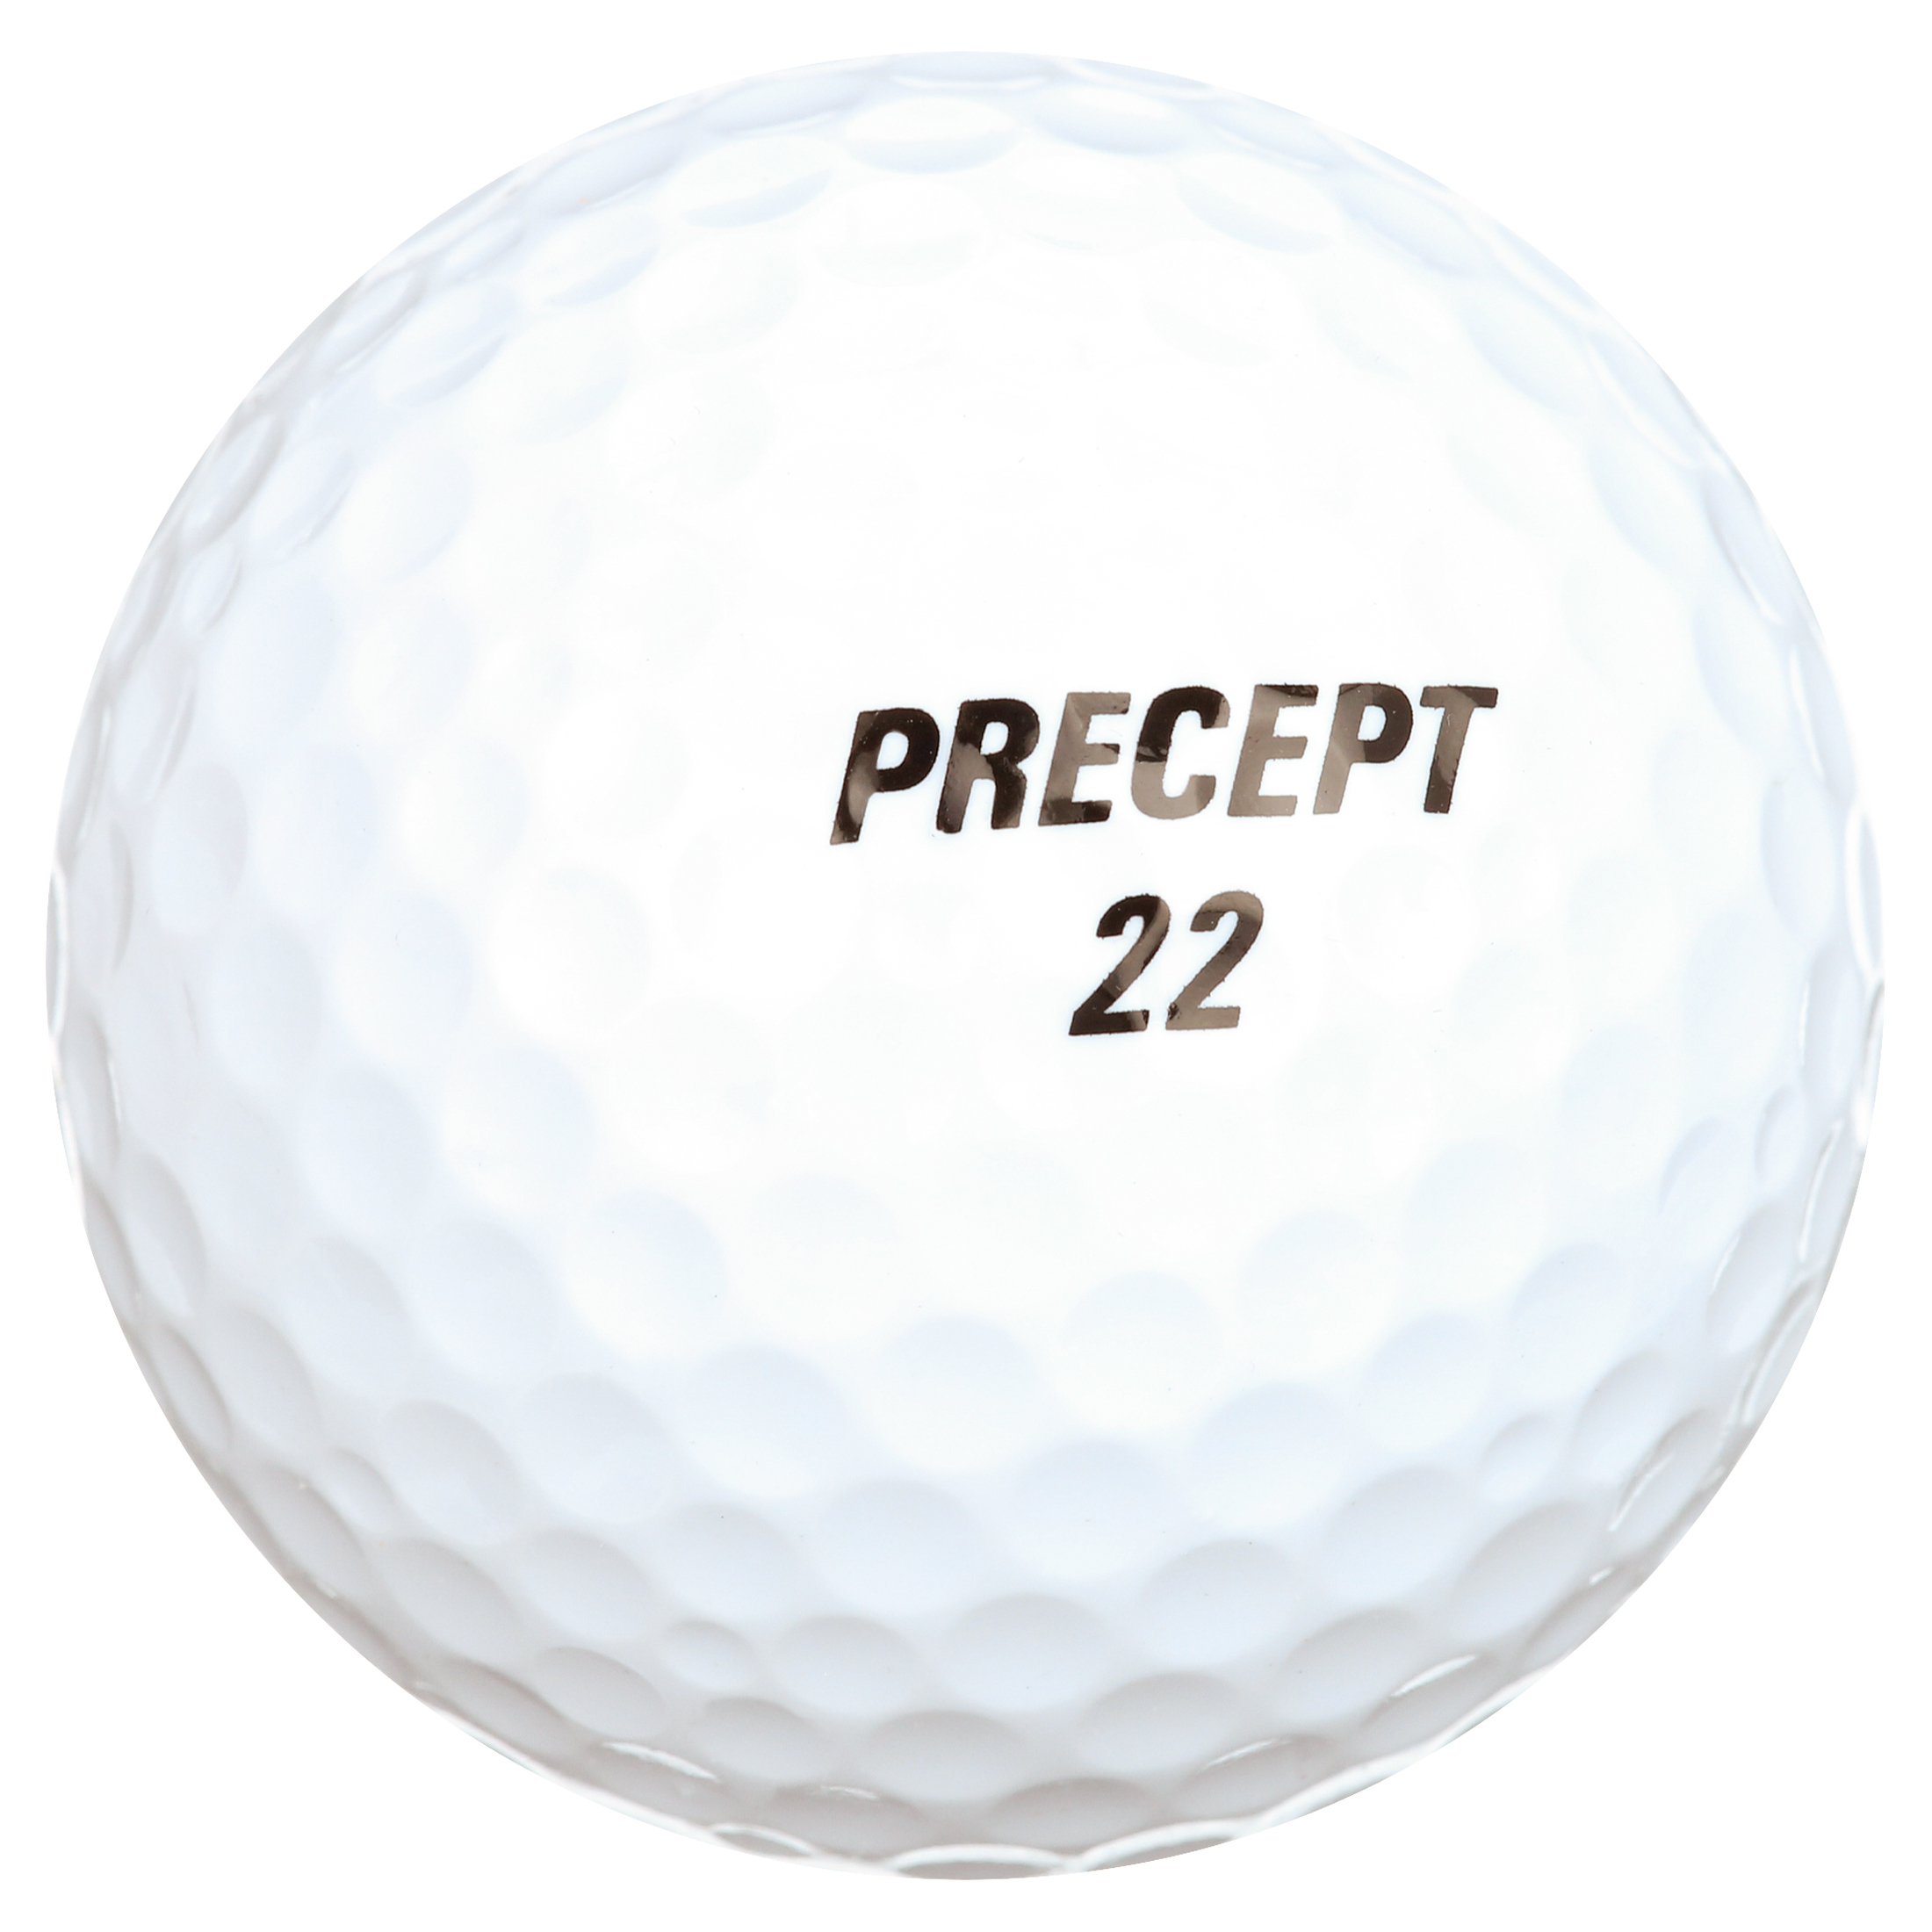 Bridgestone Golf 2017 Precept Laddie Extreme Golf Balls, Prior Generation, 24 Pack - image 2 of 5